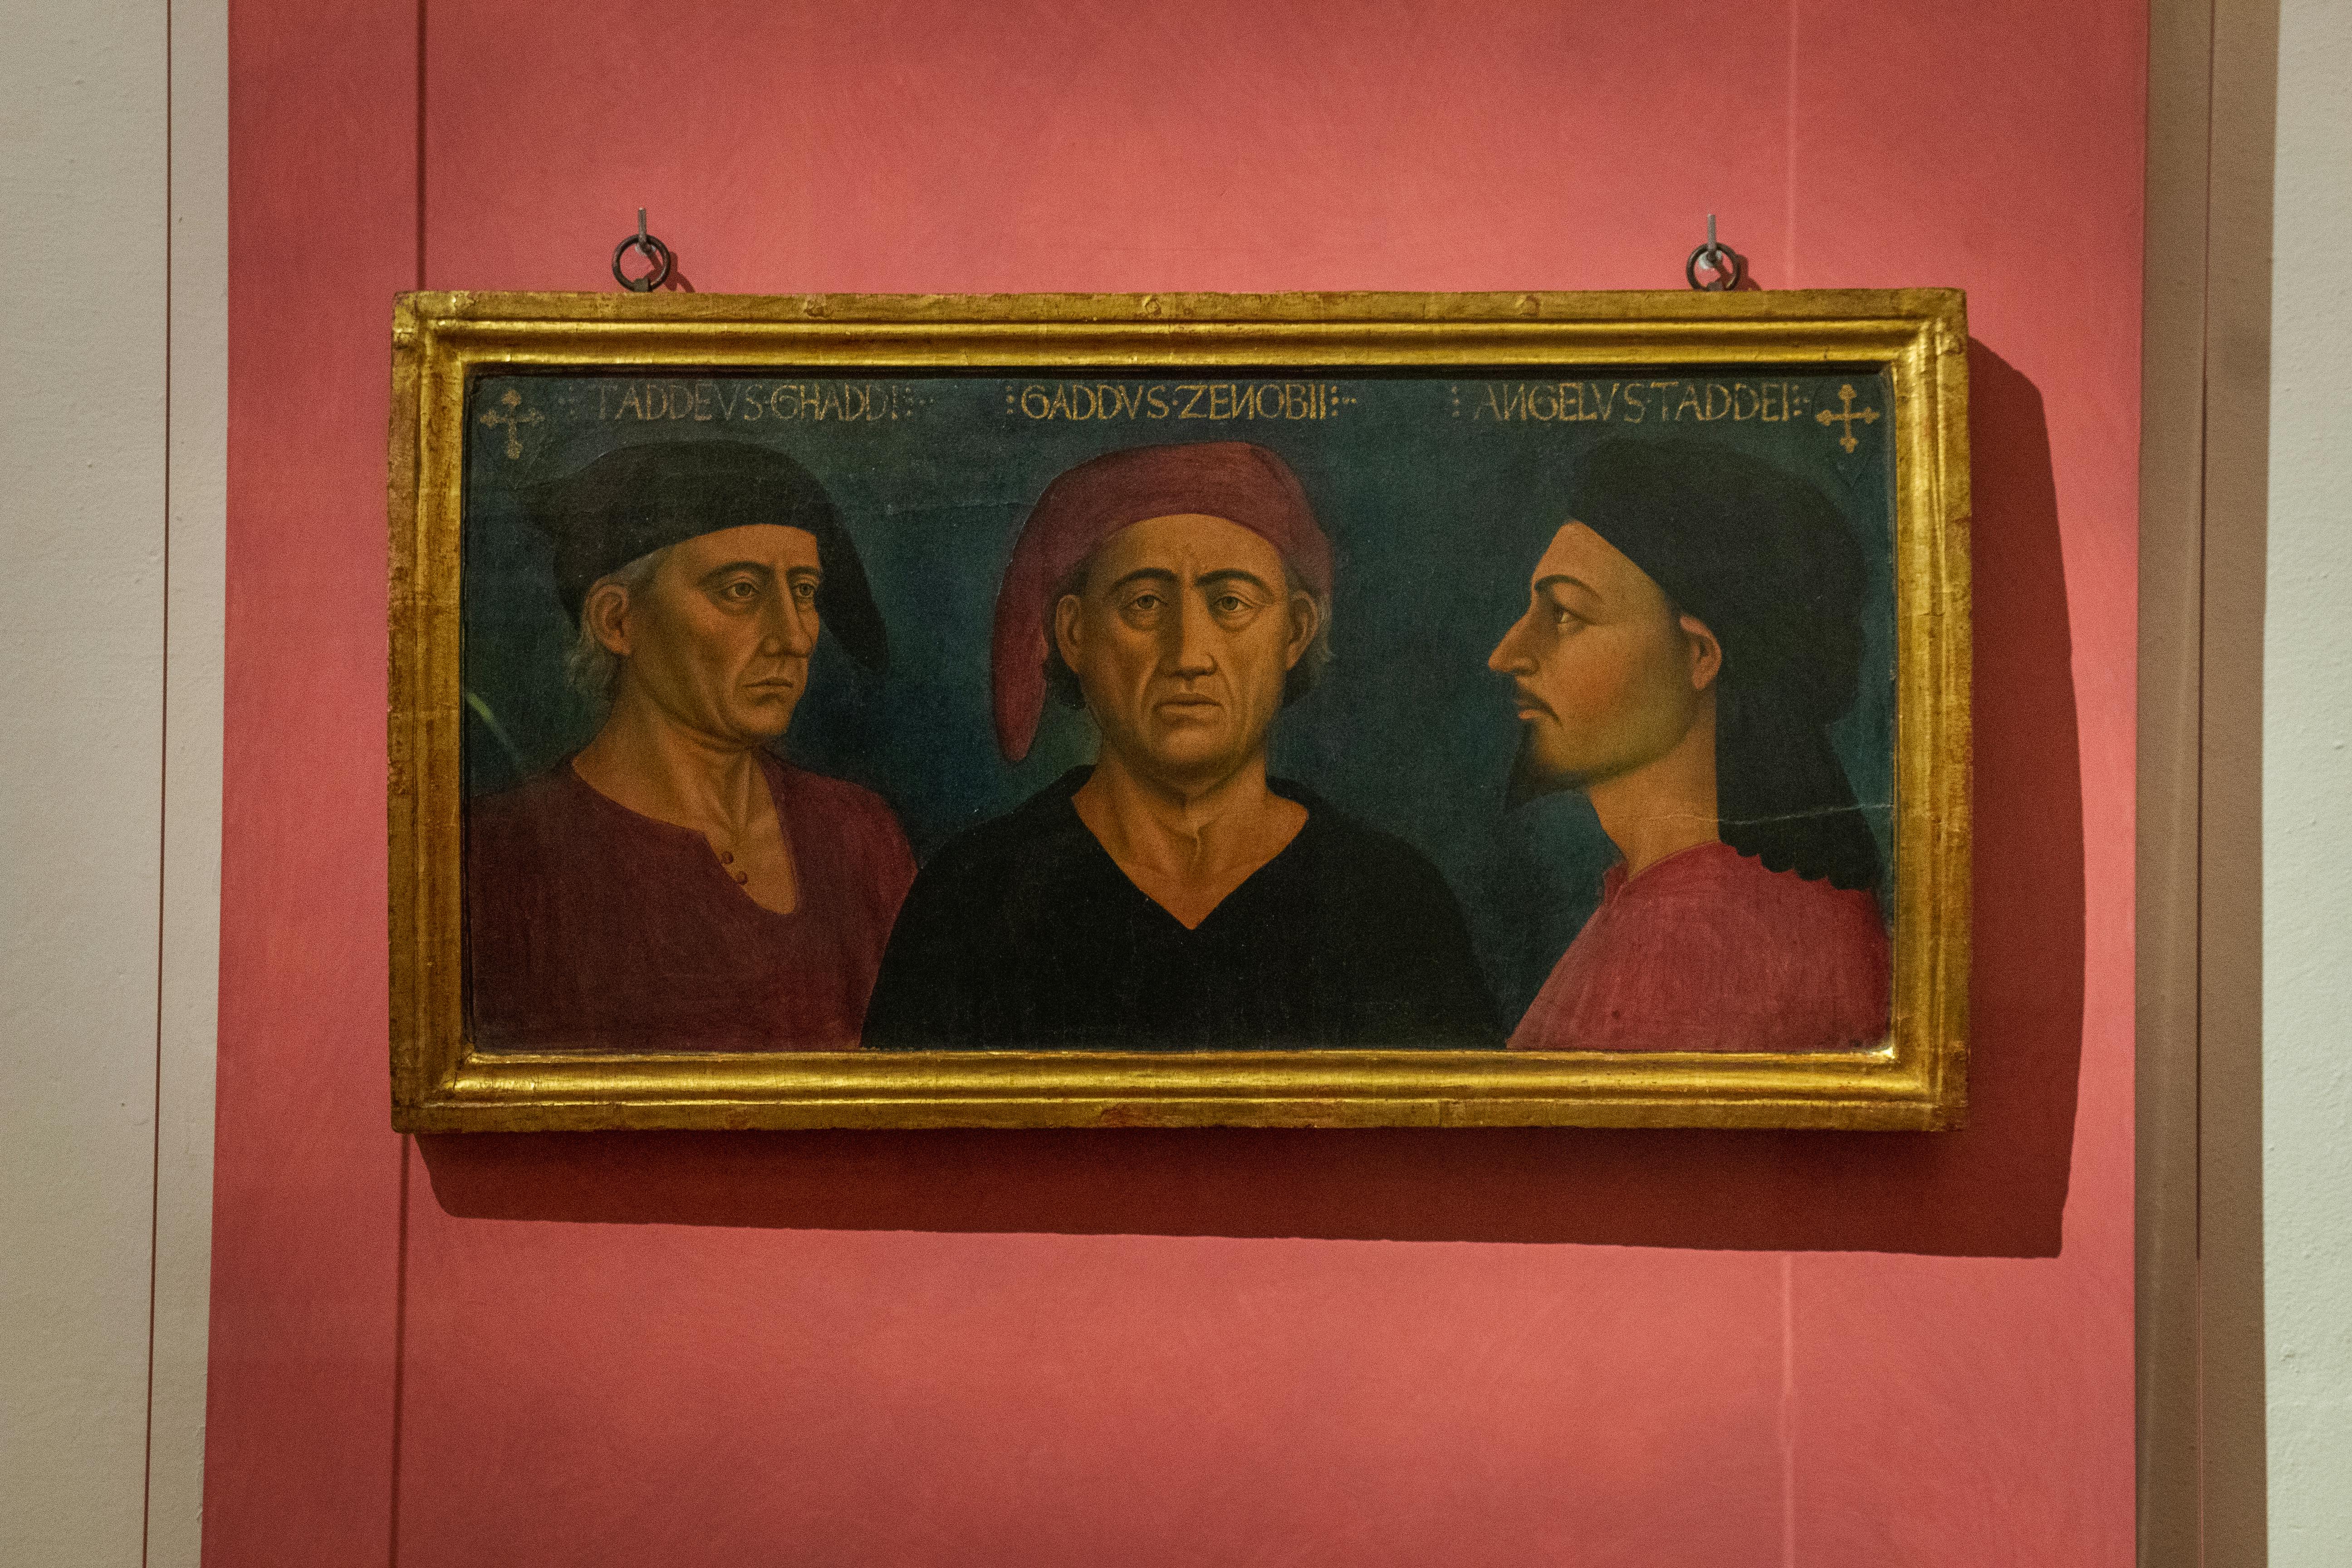 The Uffizi Self-portraits